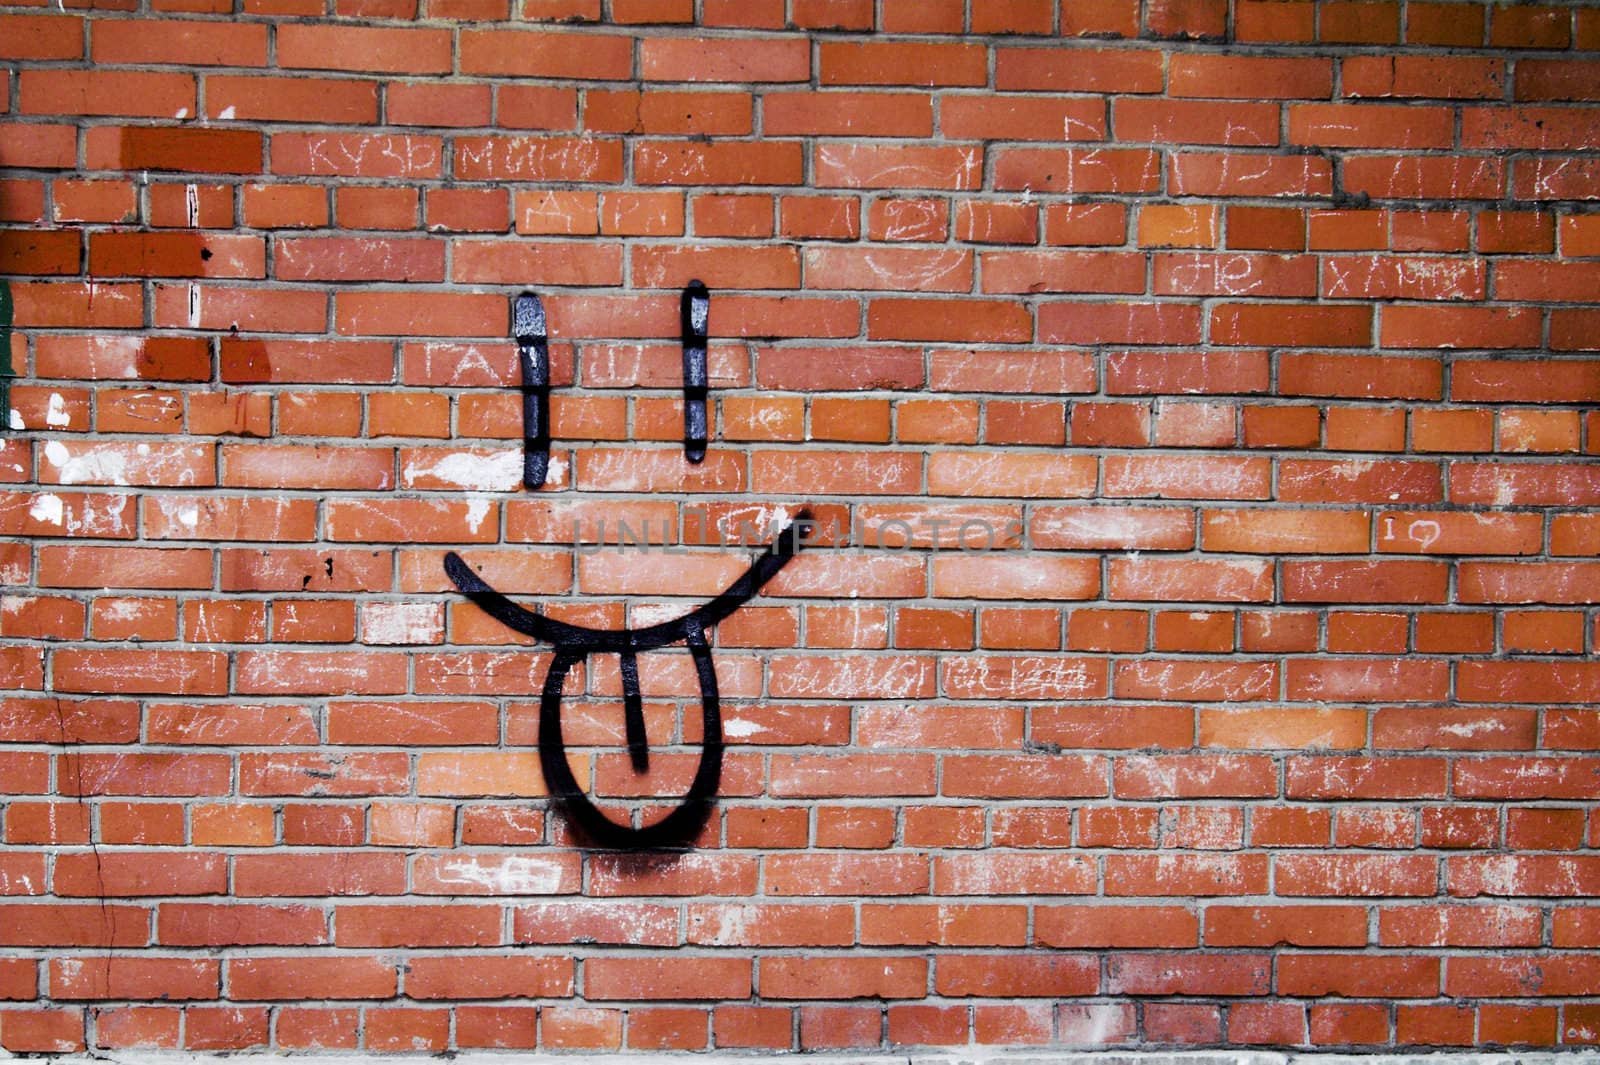 Smile Graffiti on a Red Brick Wall.